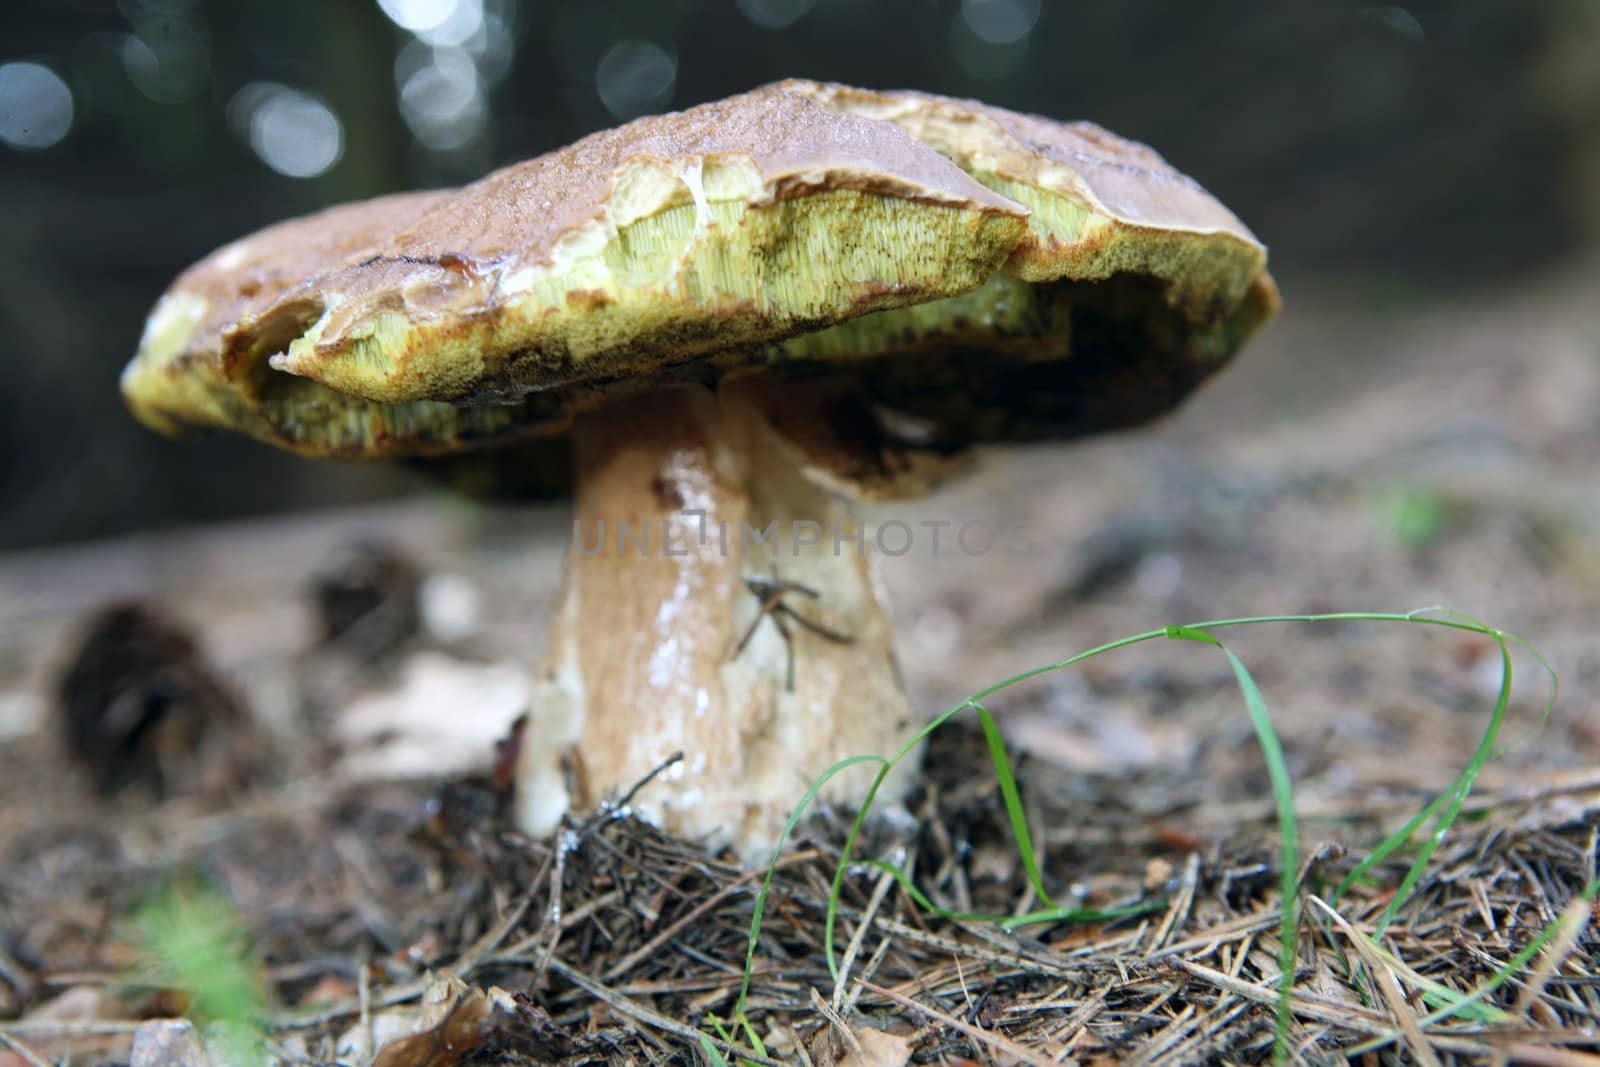 Wild mushroom growing in forest in fir-needles